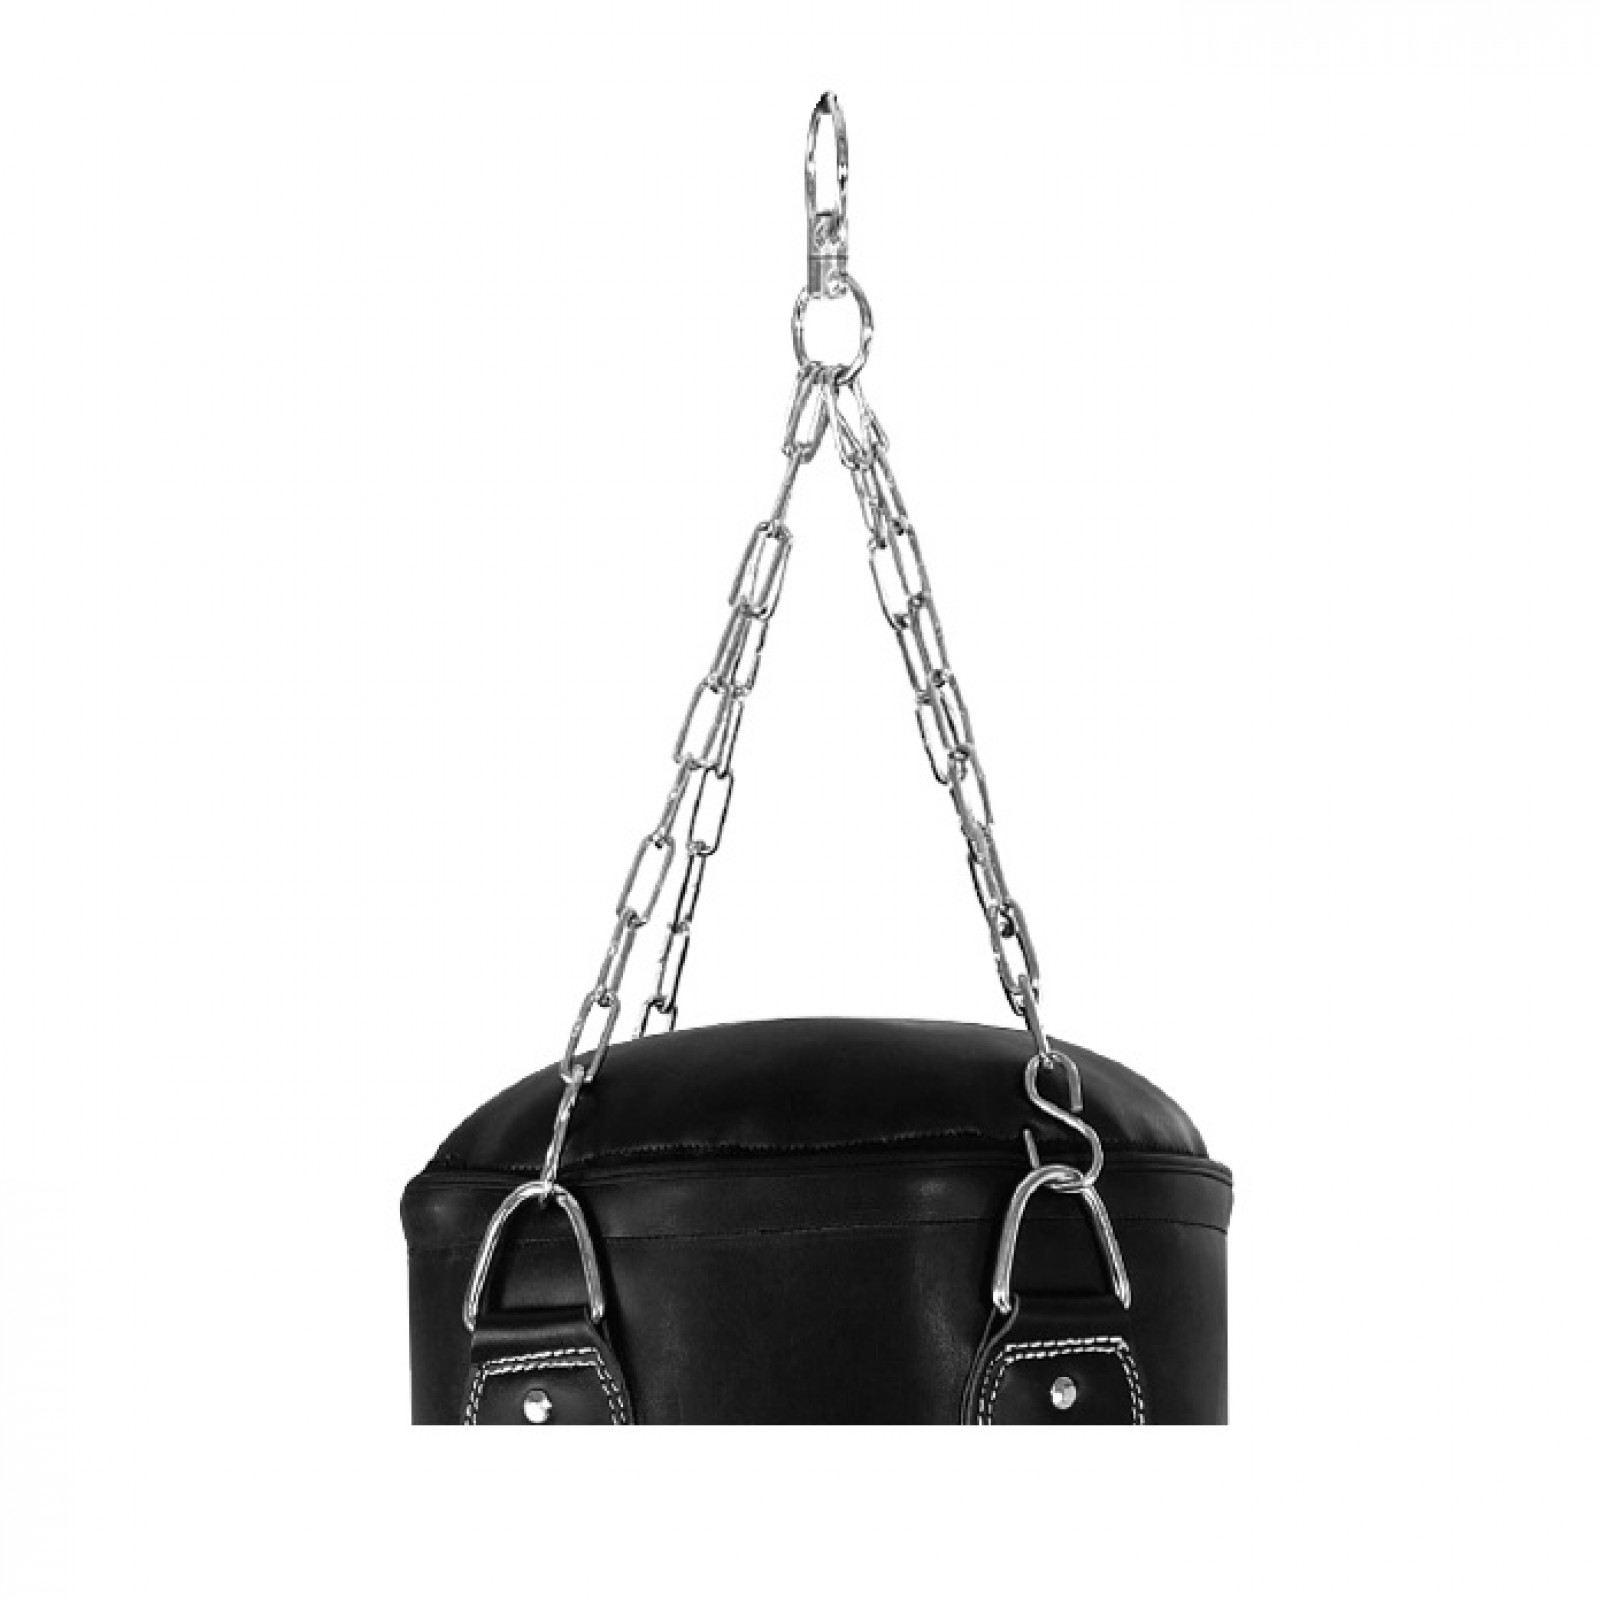 Heavy Bag Hanging Chain w/ Swivel